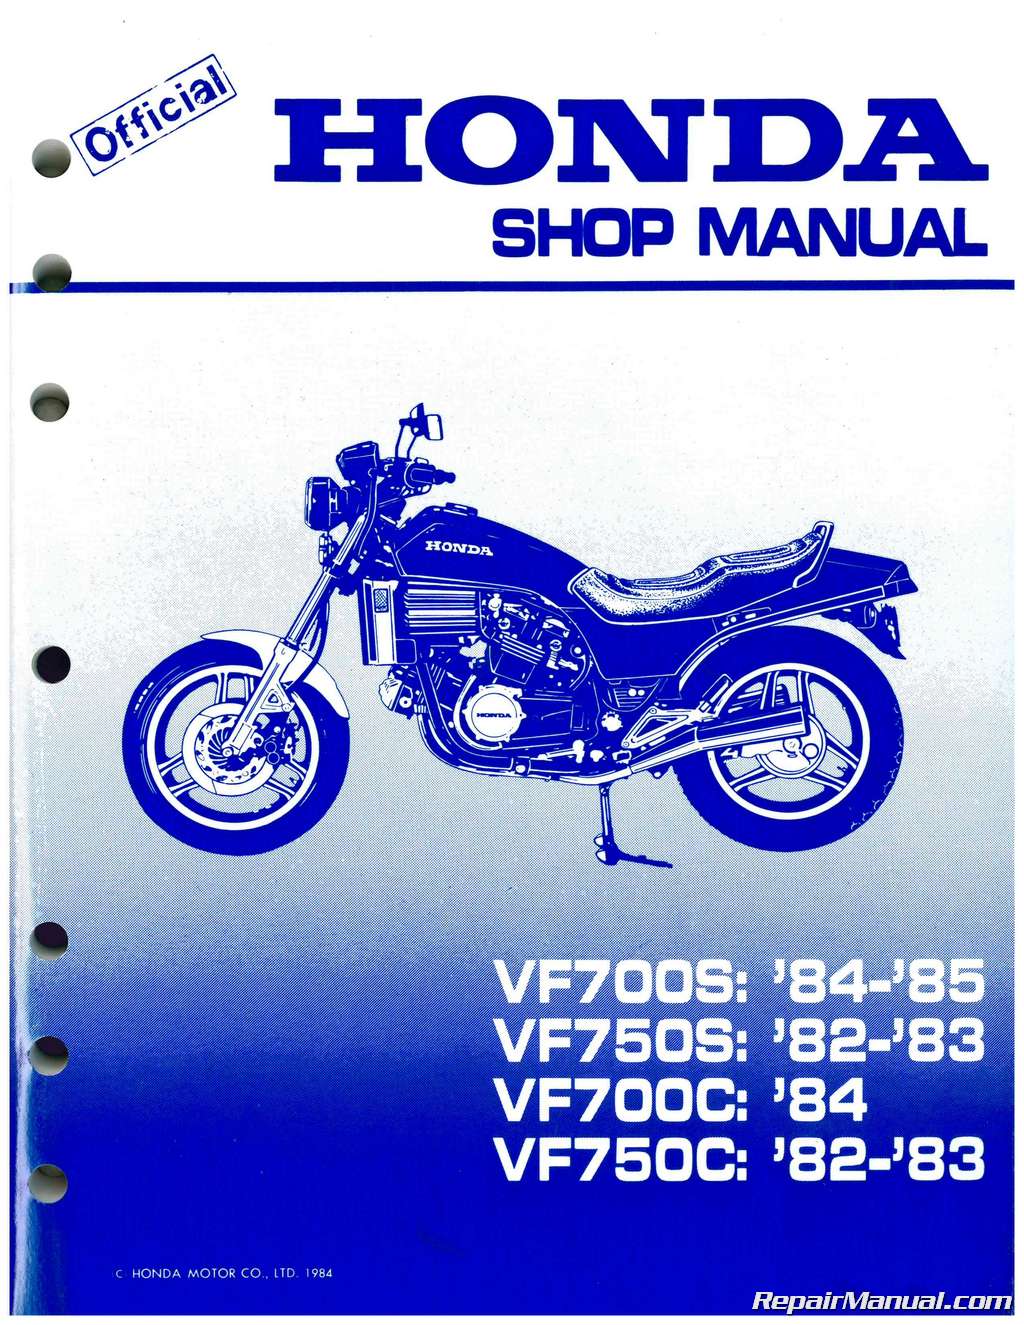 Honda magna service manual online